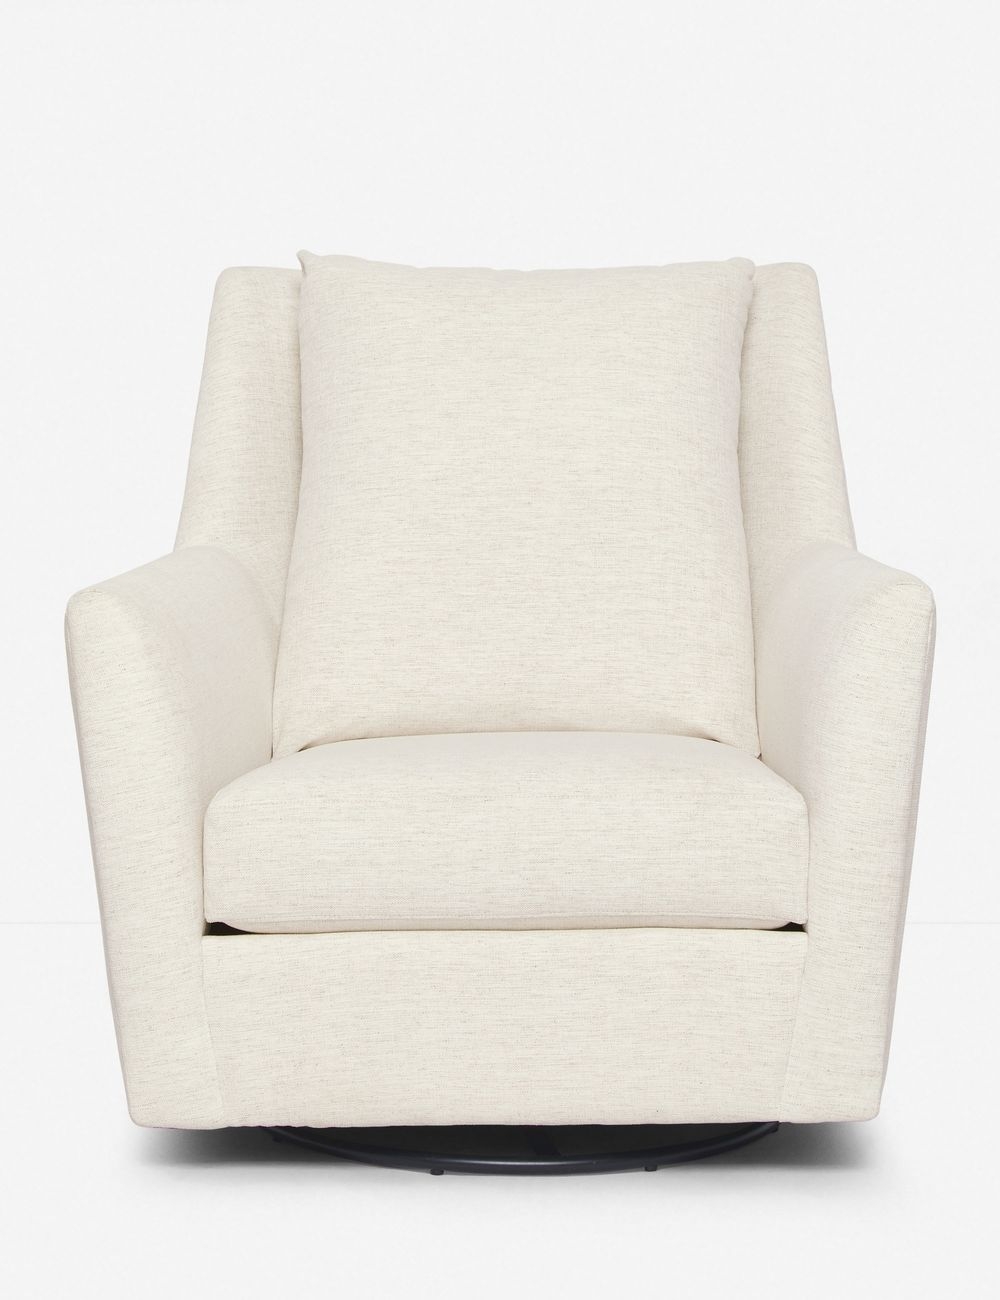 Hayley Swivel Glider Chair, Sand - Image 0